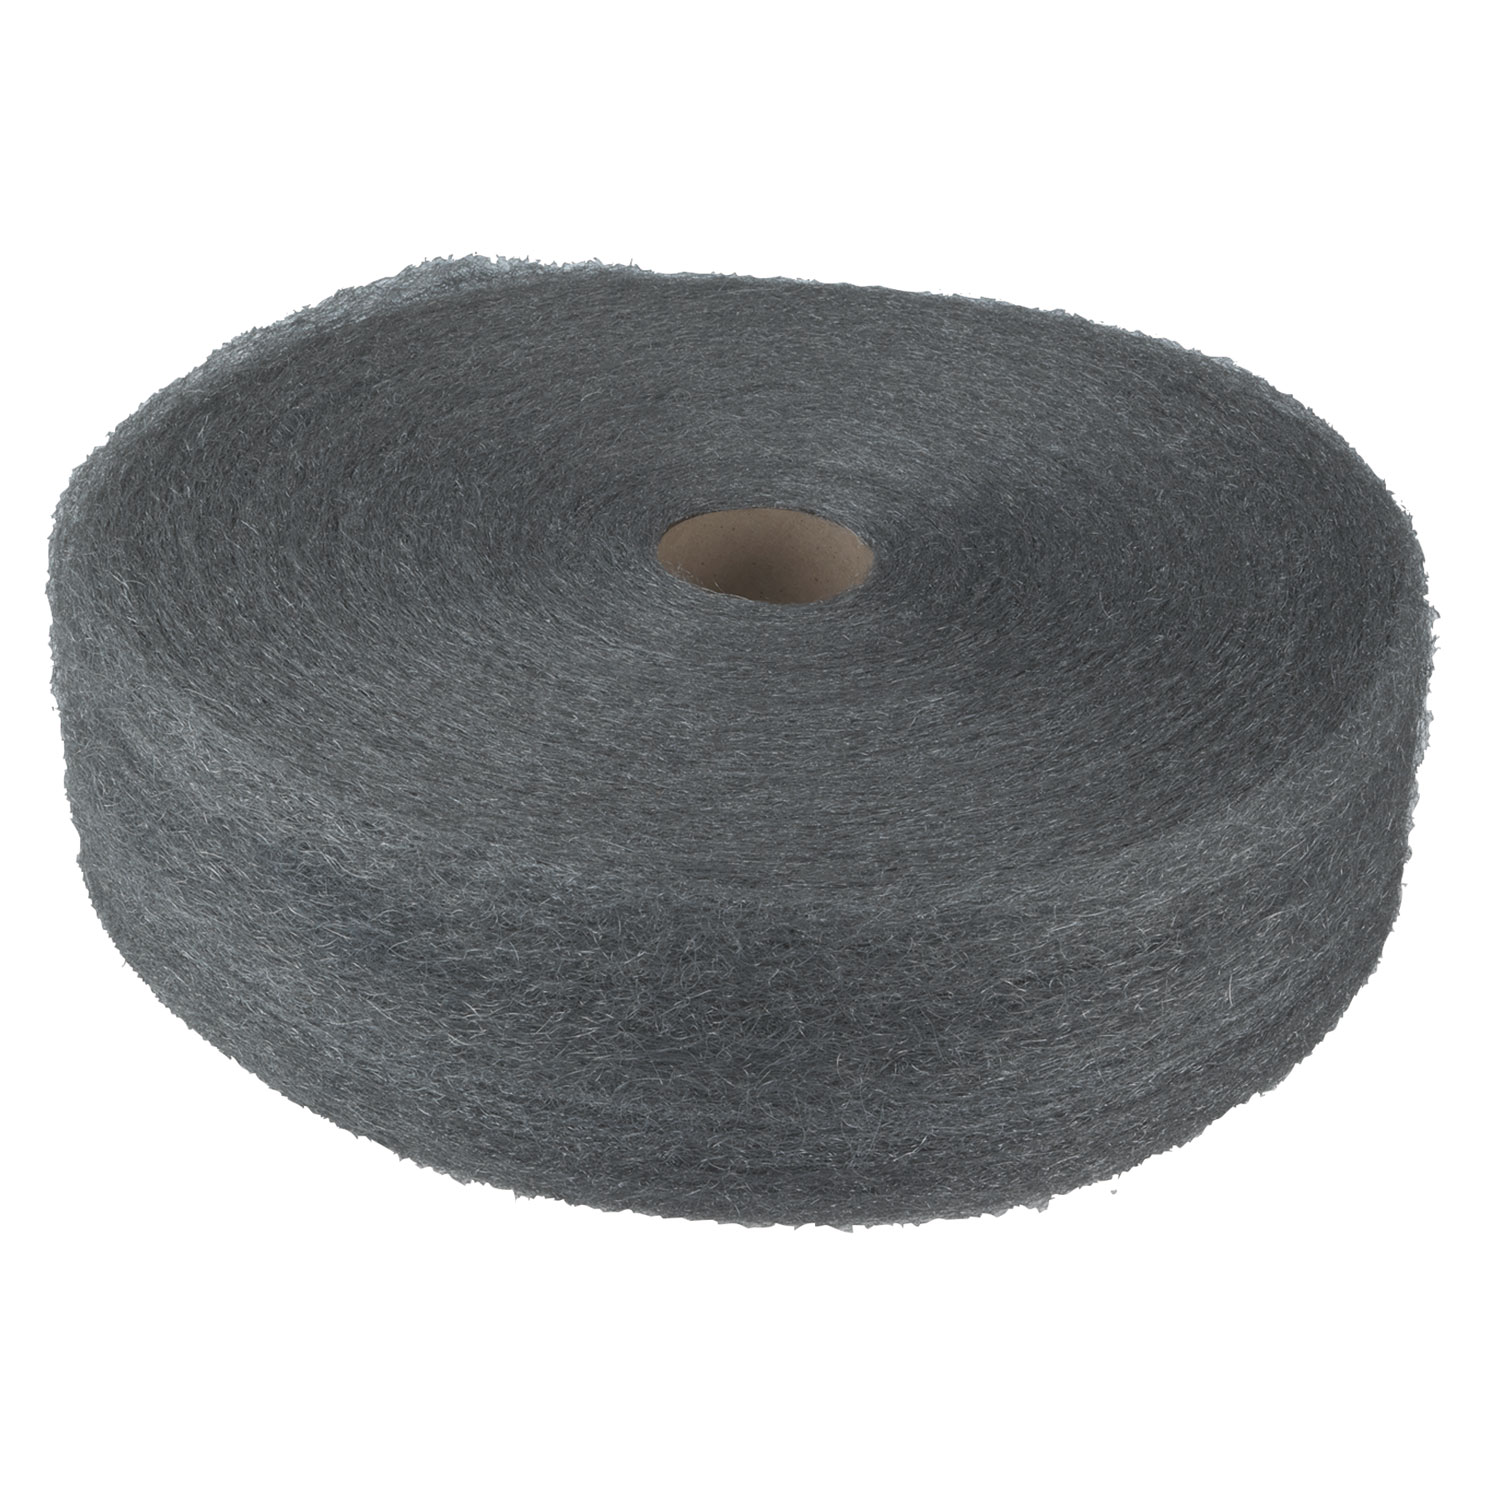  GMT 105044 Industrial-Quality Steel Wool Reel, #1 Medium, 5-lb Reel, 6/Carton (GMA105044) 